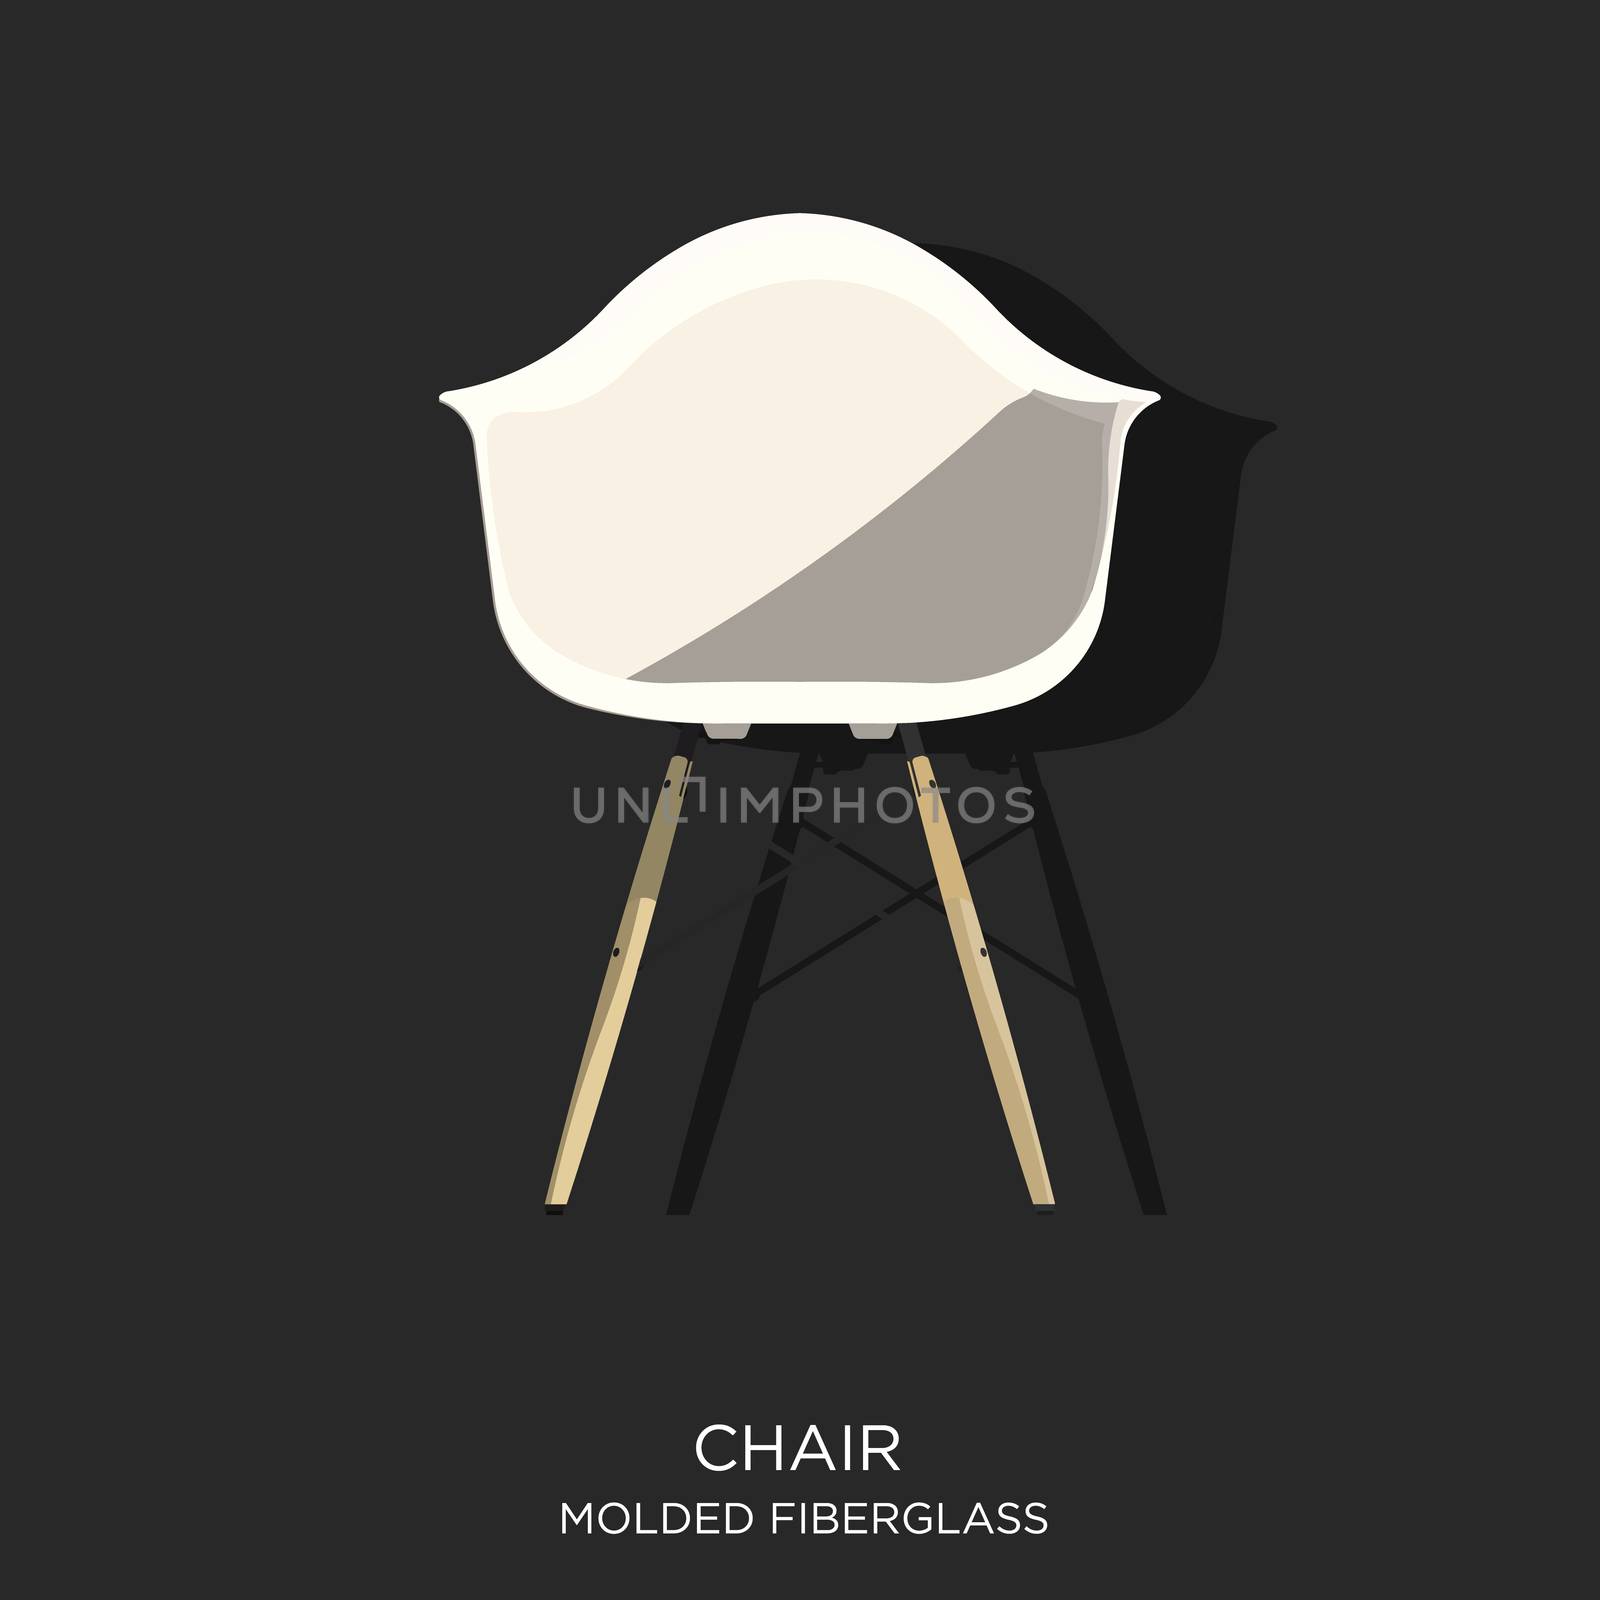 Molded Fiberglass Chair